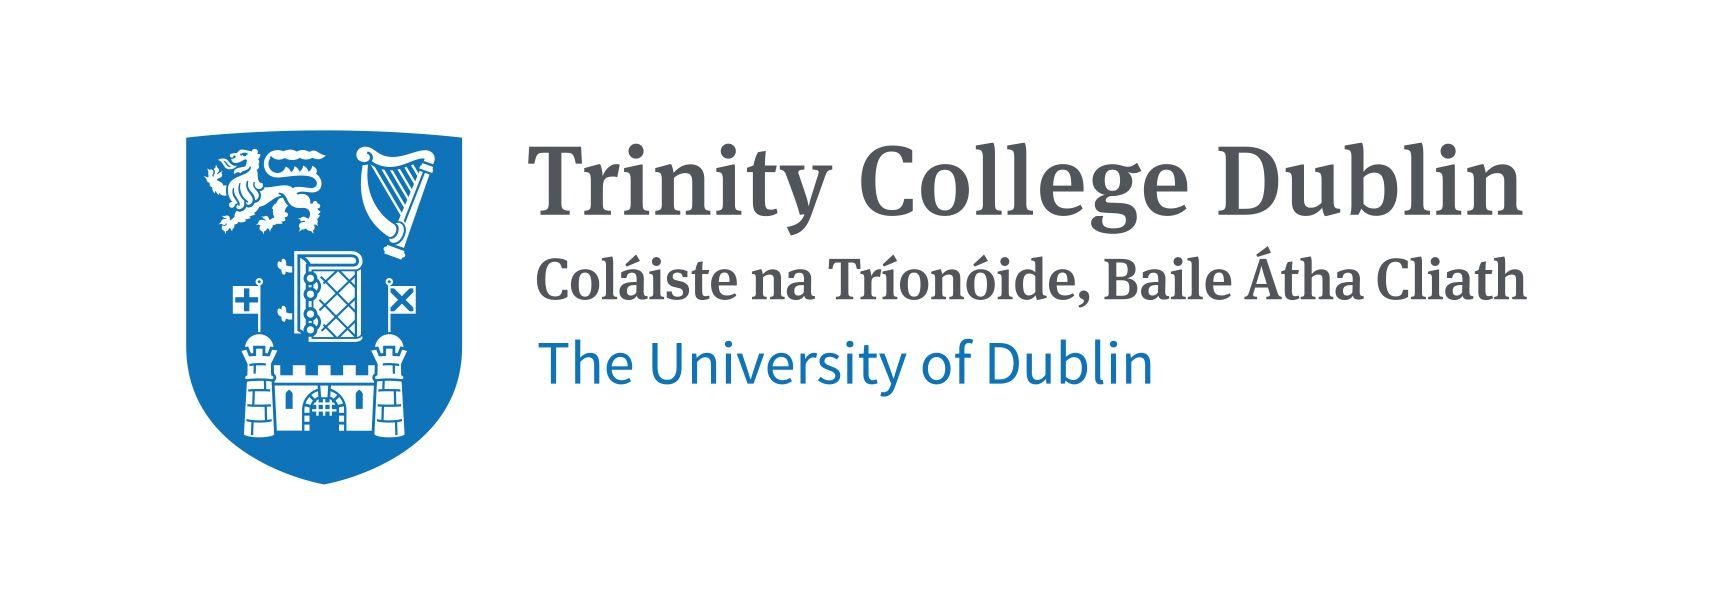 Trinity College Dublin Logo - Trinity College Dublin, the University of Dublin, Ireland